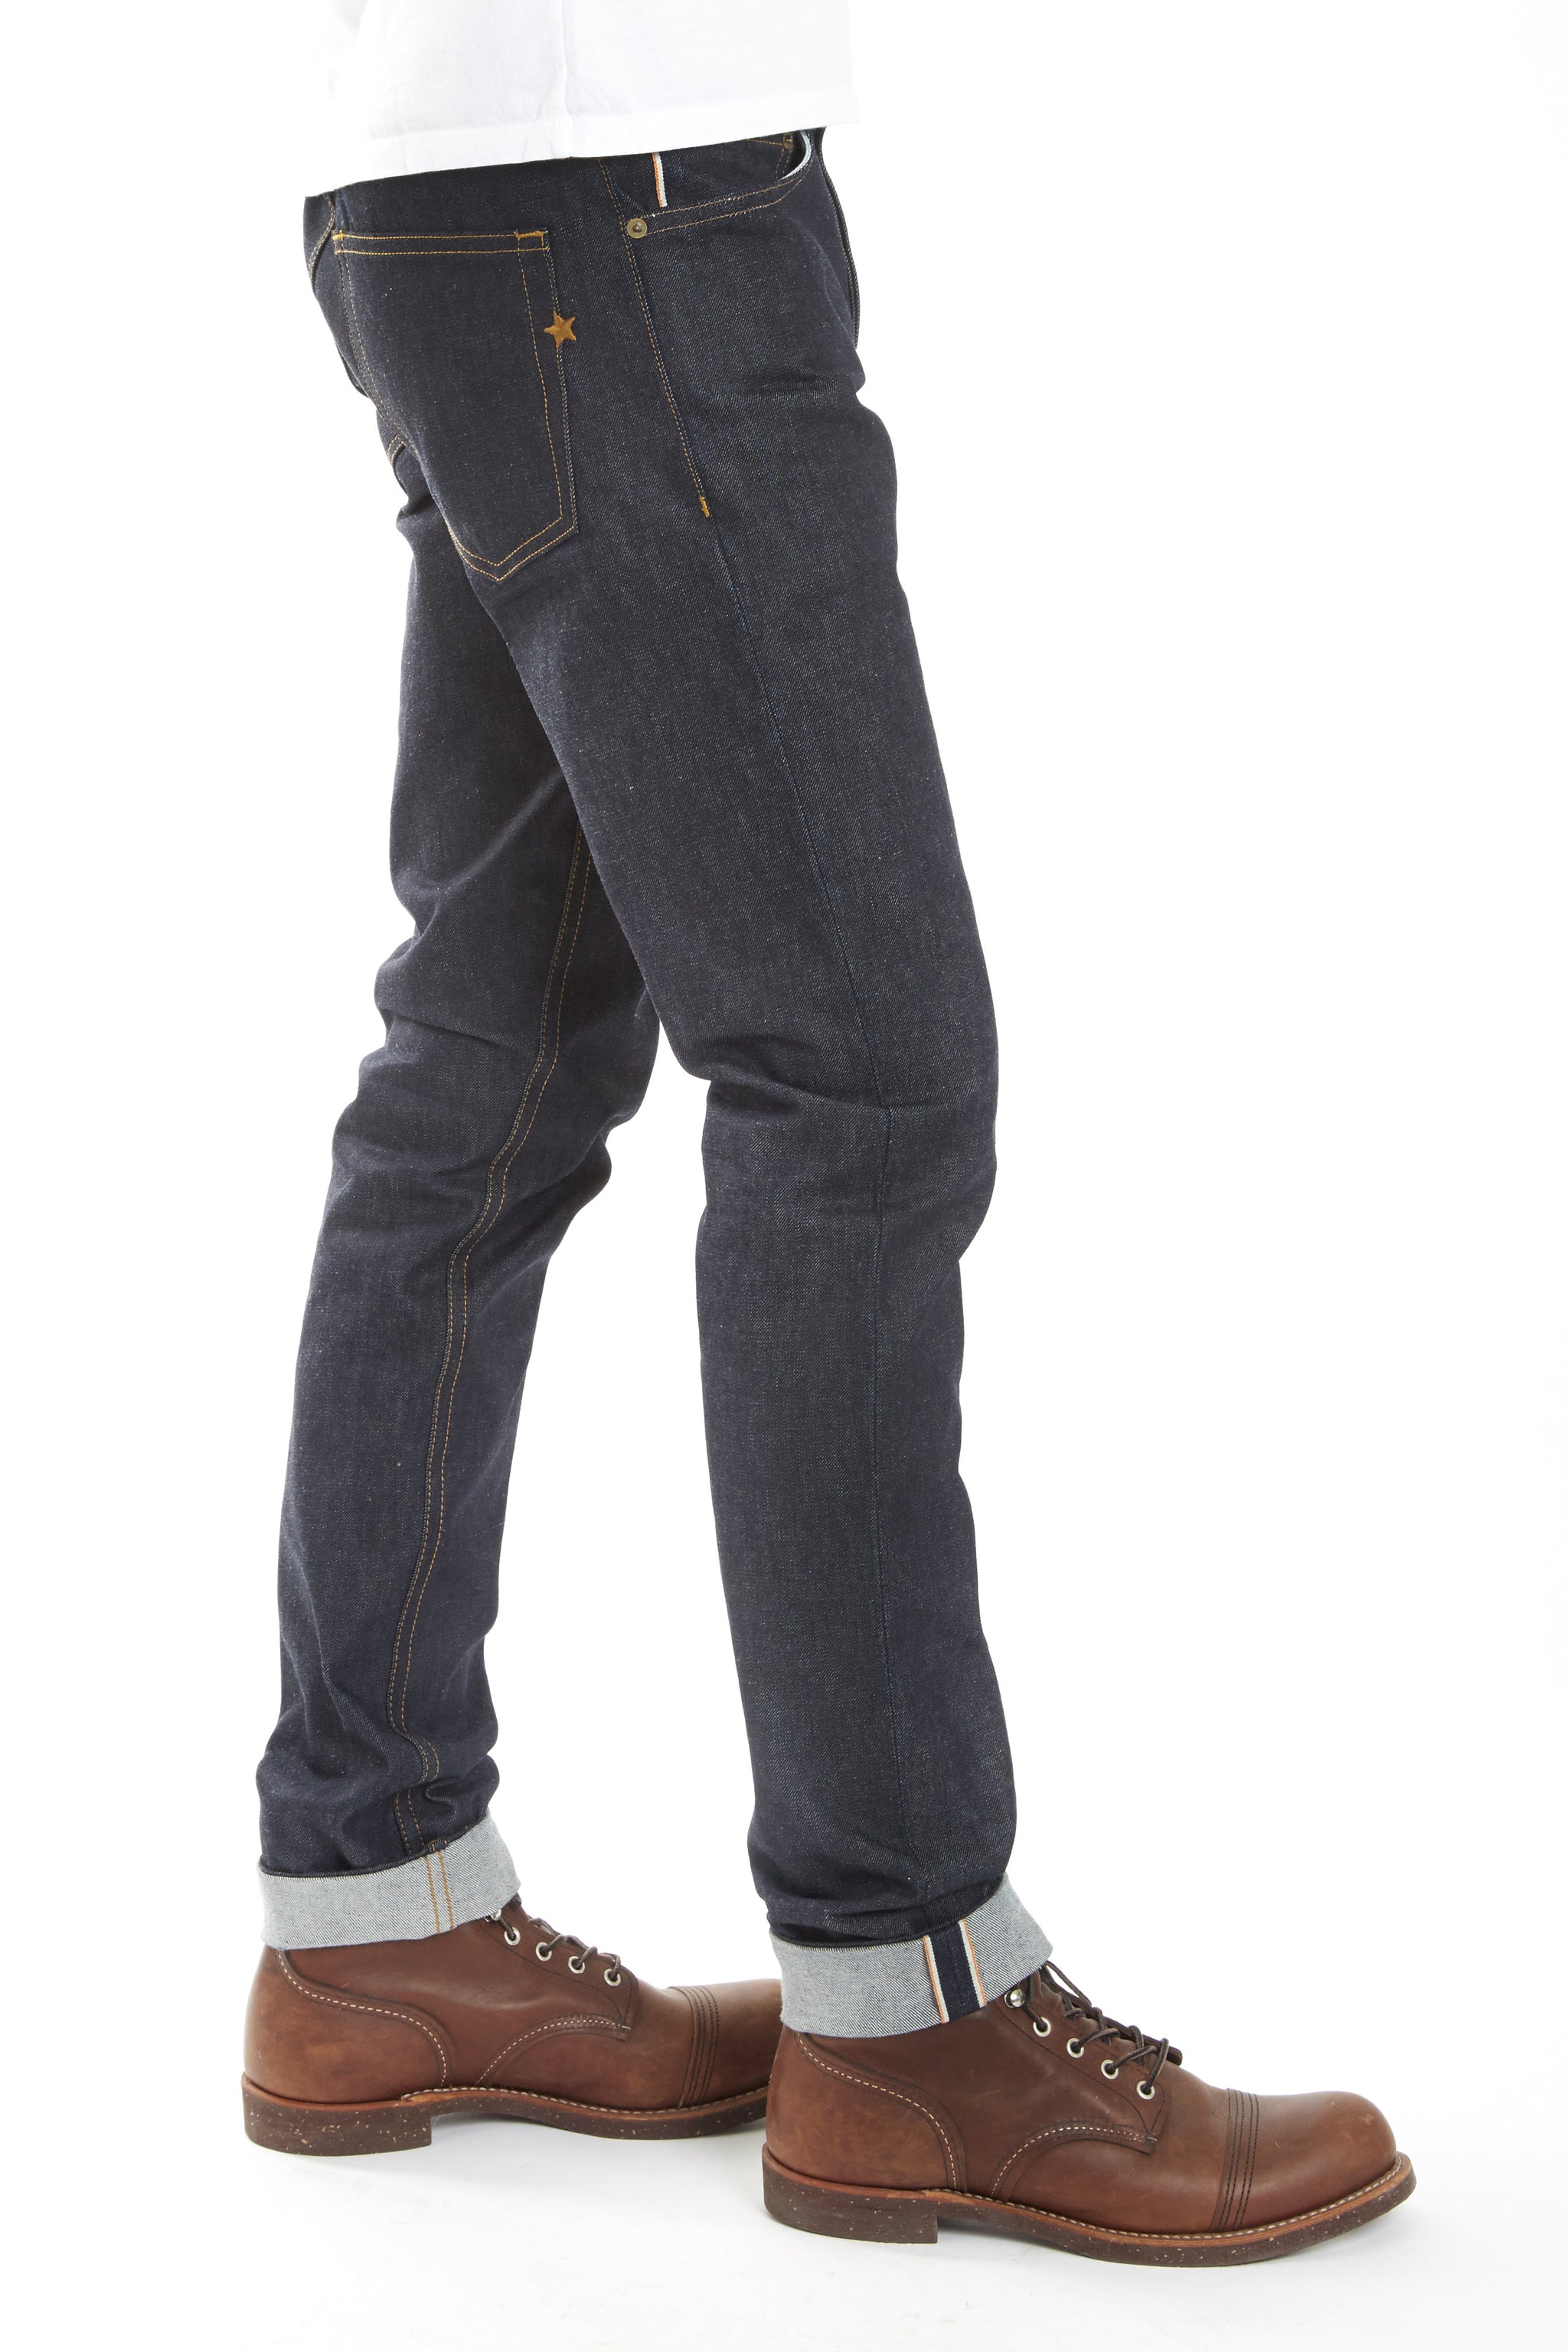 heavyweight selvedge jeans